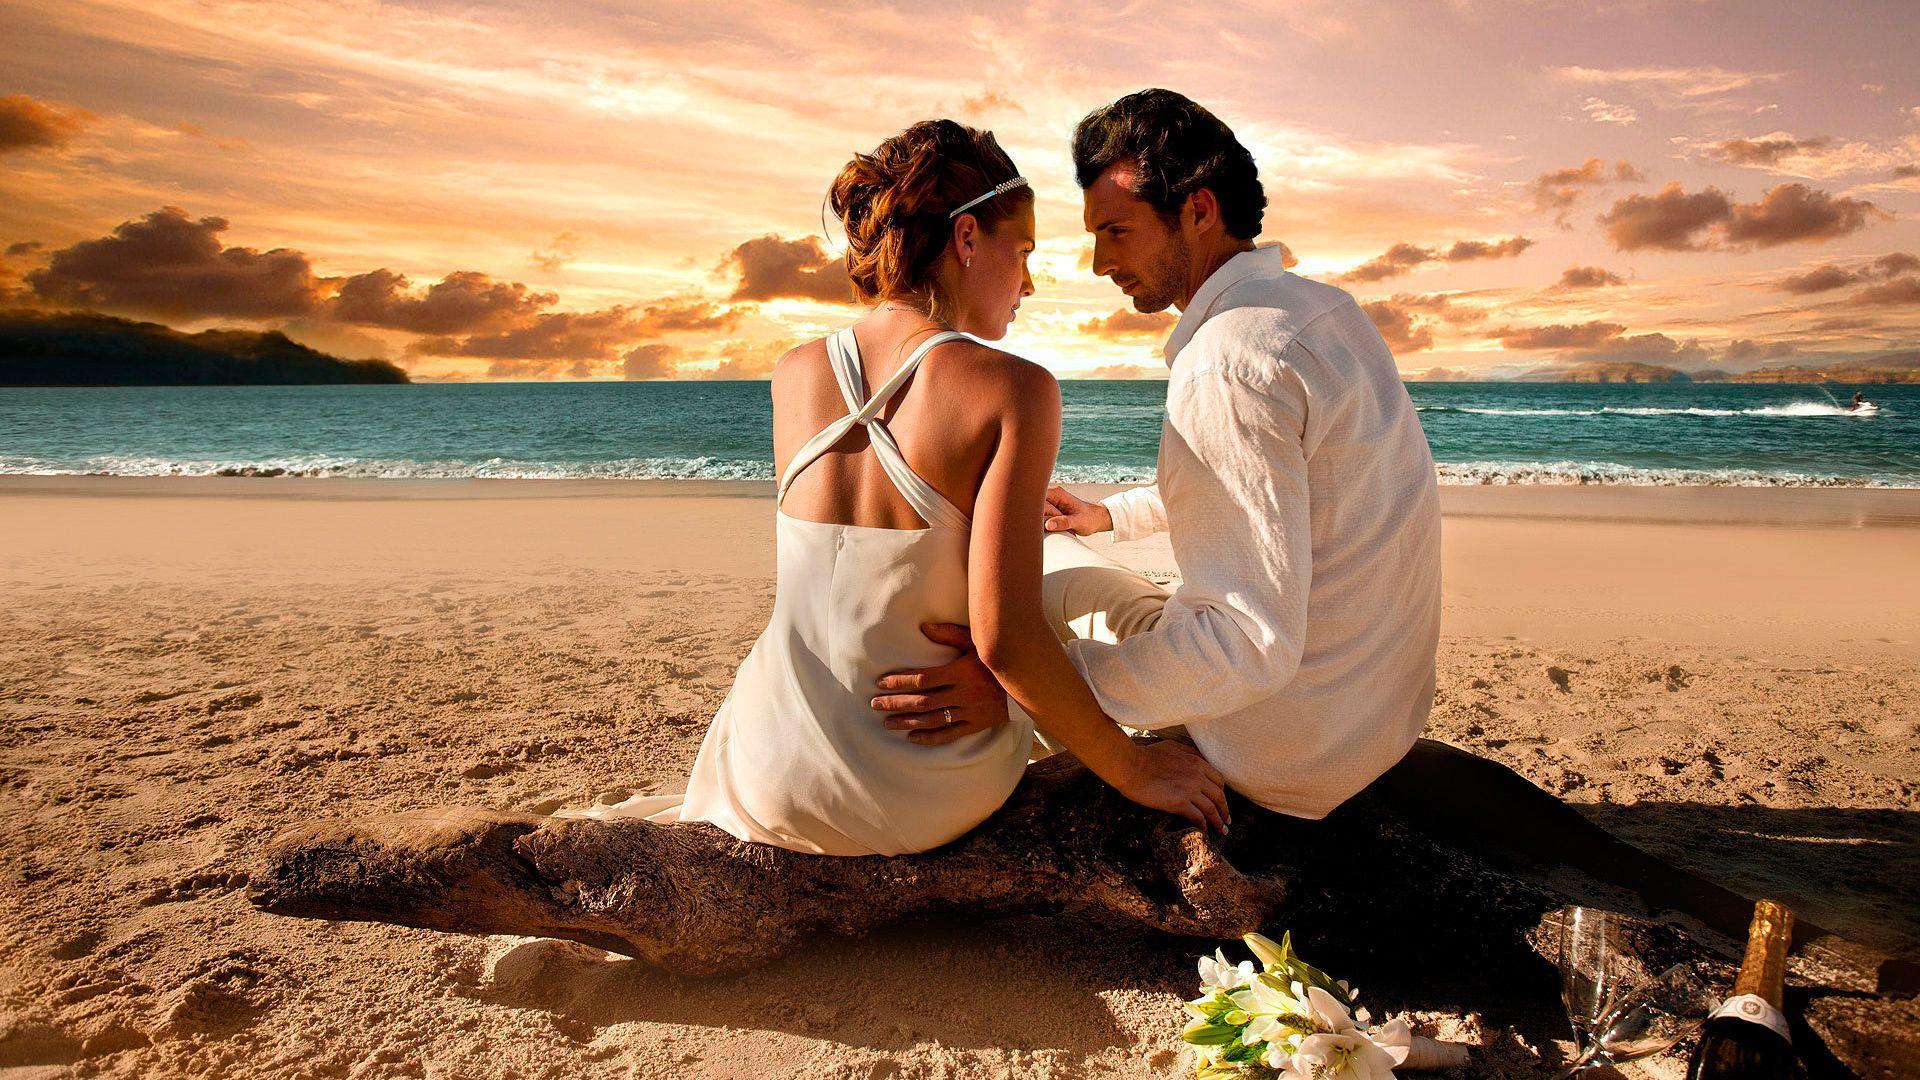 Love Couple Wallpaper. Beach Picture Ideas Of Couple. Romantic